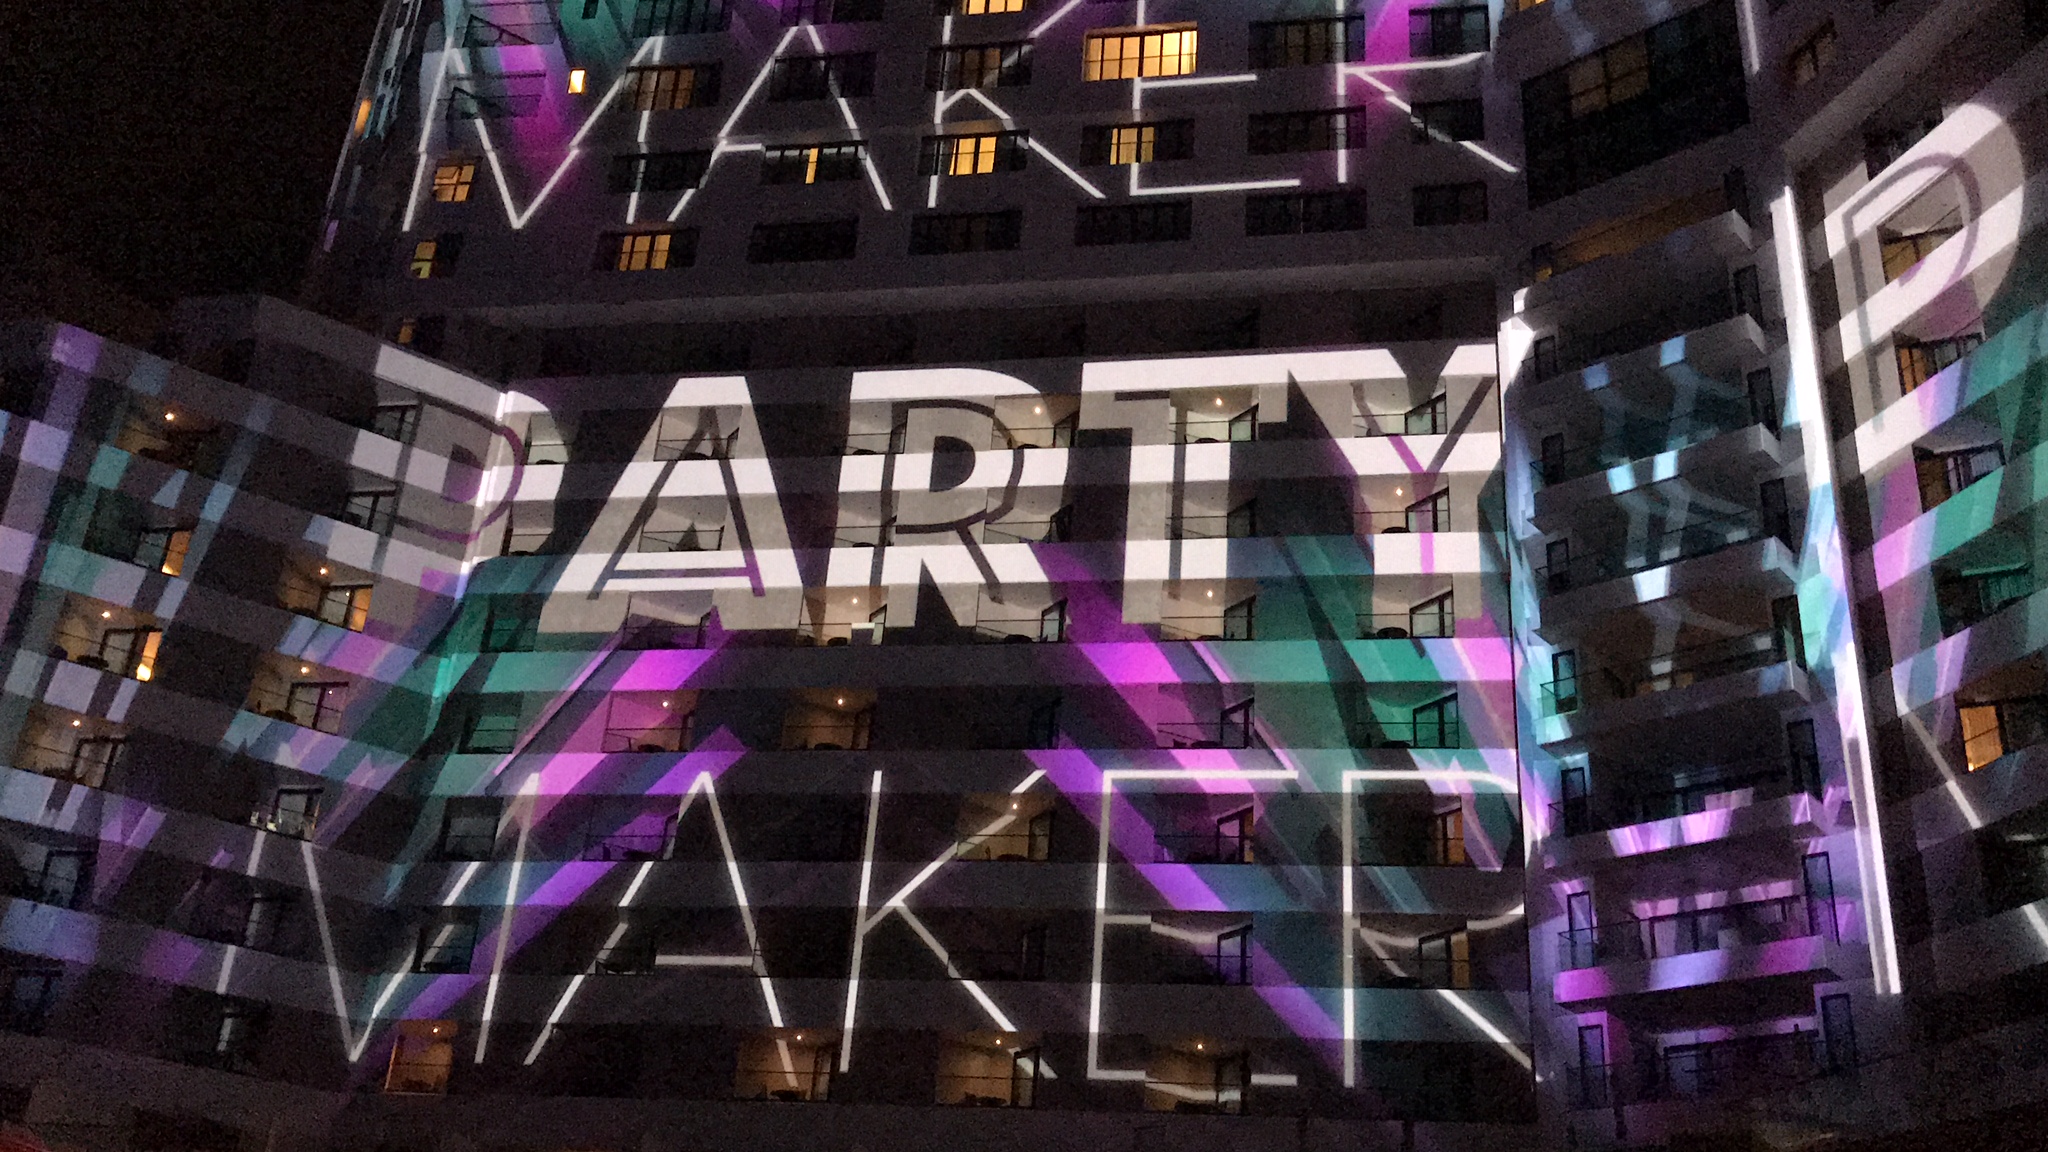 Melody Maker Party Maker Hotel & Resort laser light show!